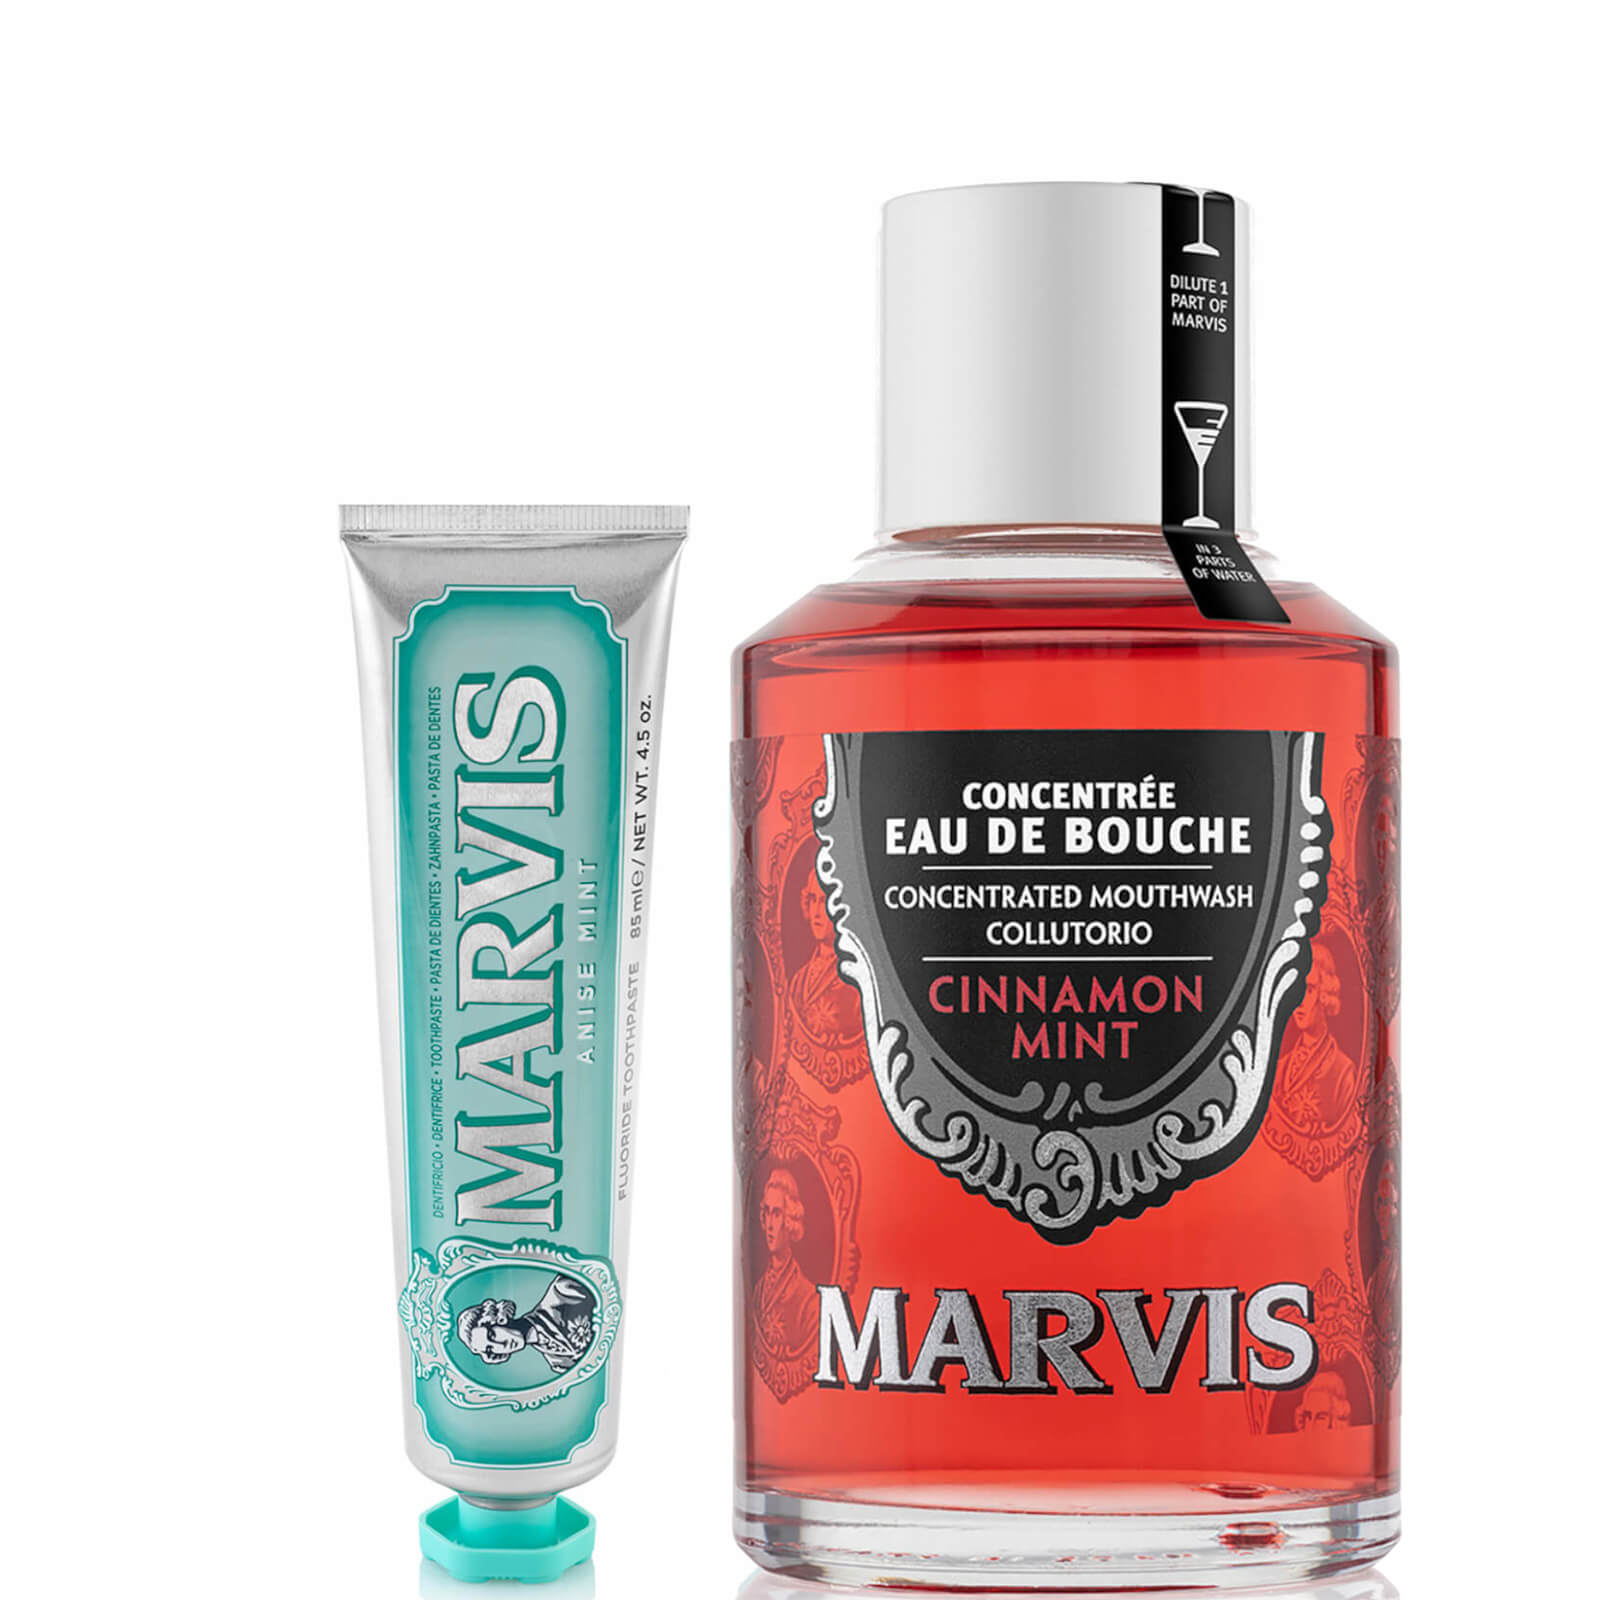 Marvis Cinnamon Mint Toothpaste and Mouthwash Bundle lookfantastic.com imagine